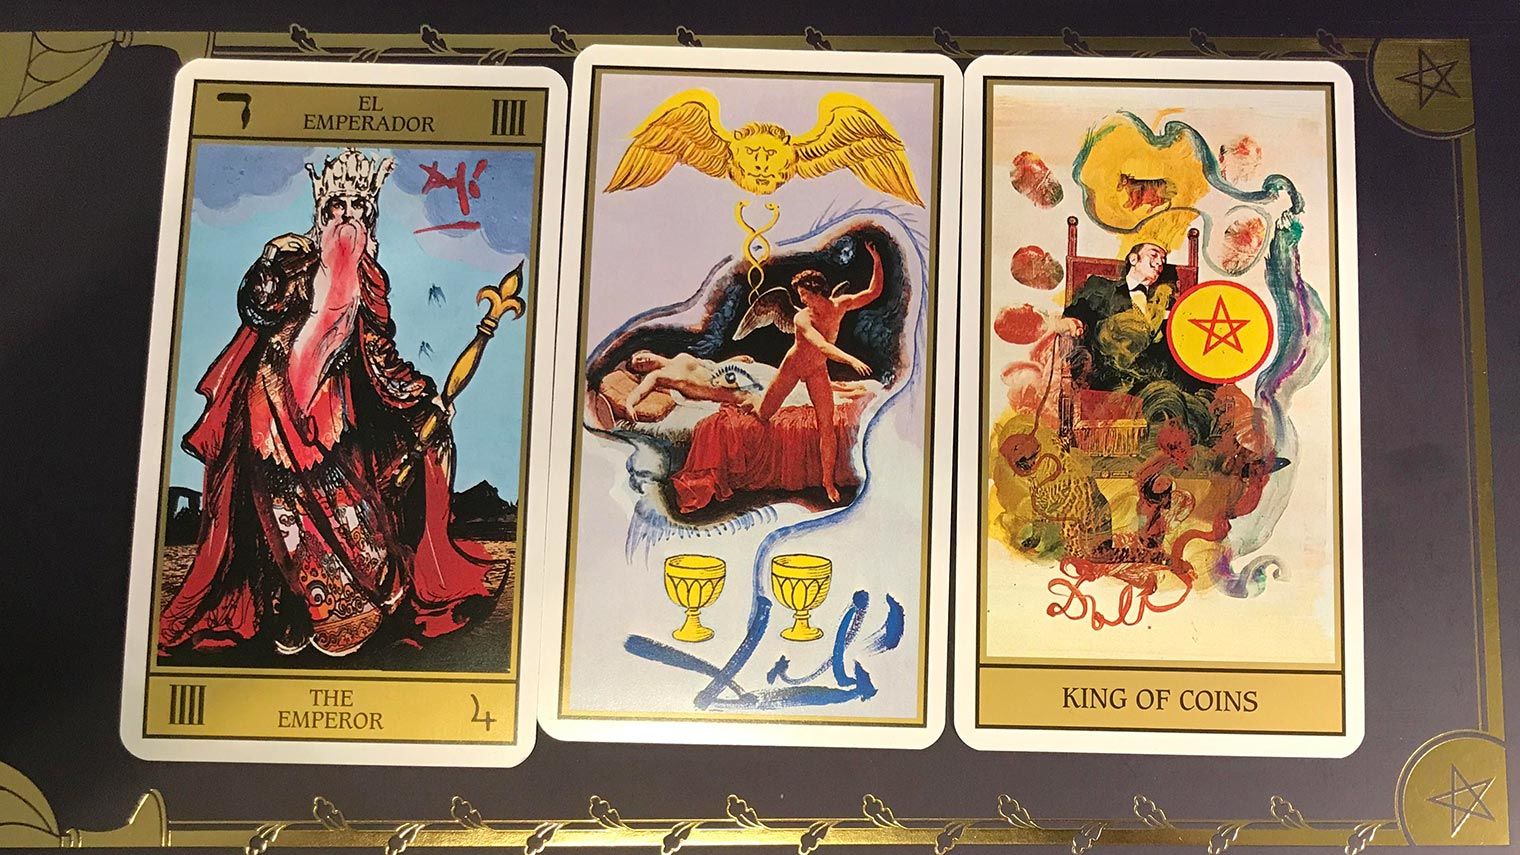 Tarot cards designed by Dali